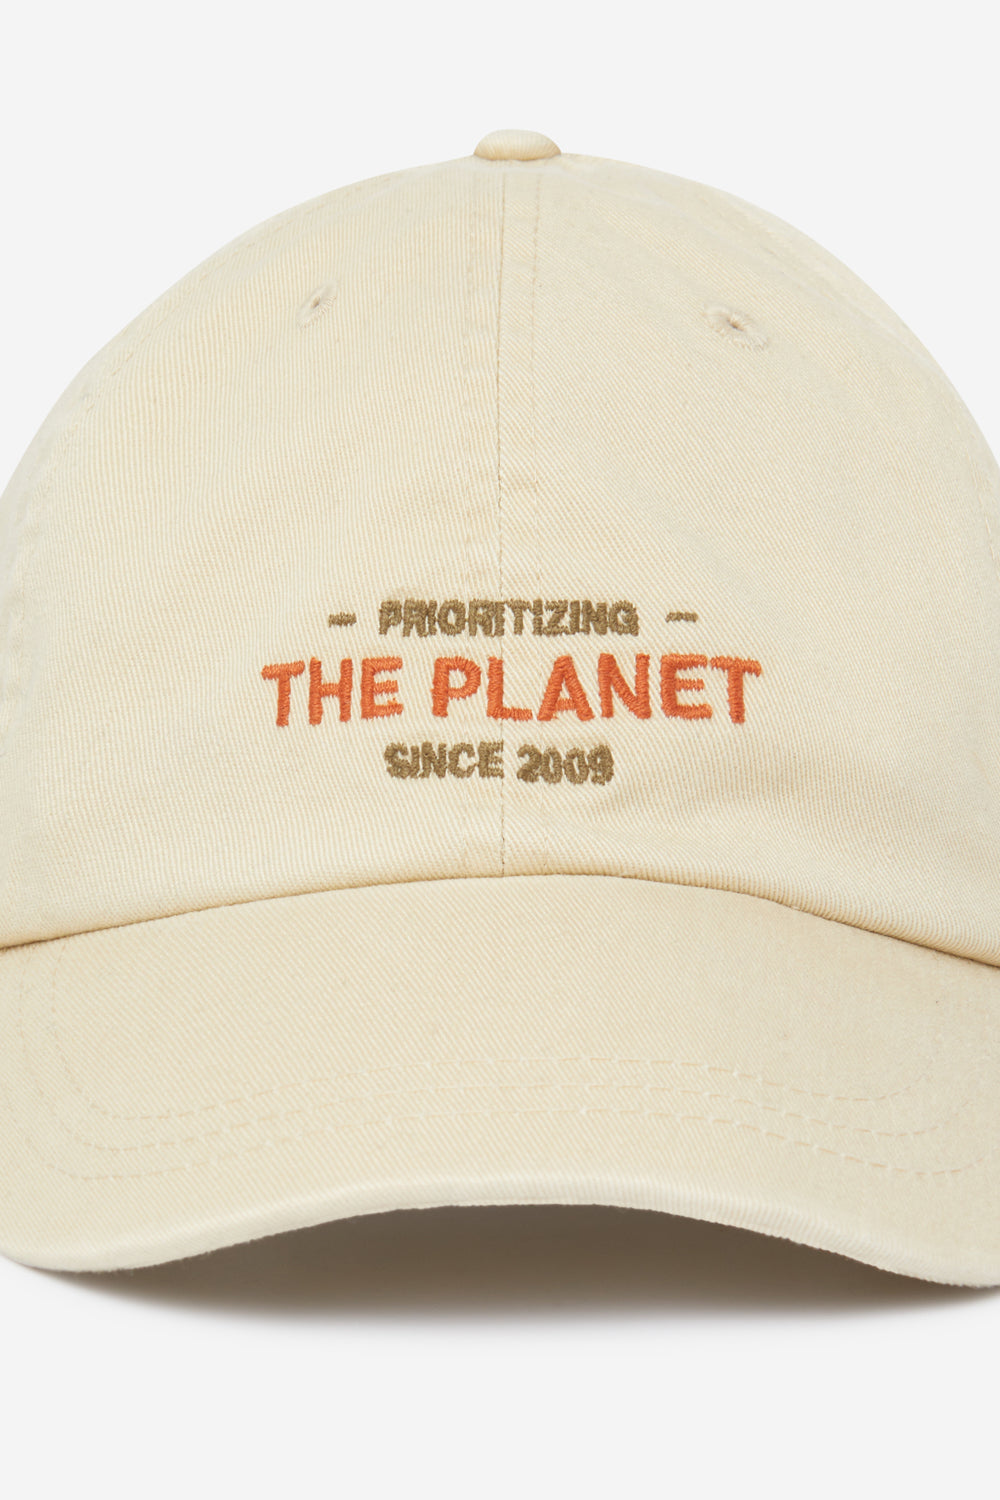 WHITE PLANET CAP